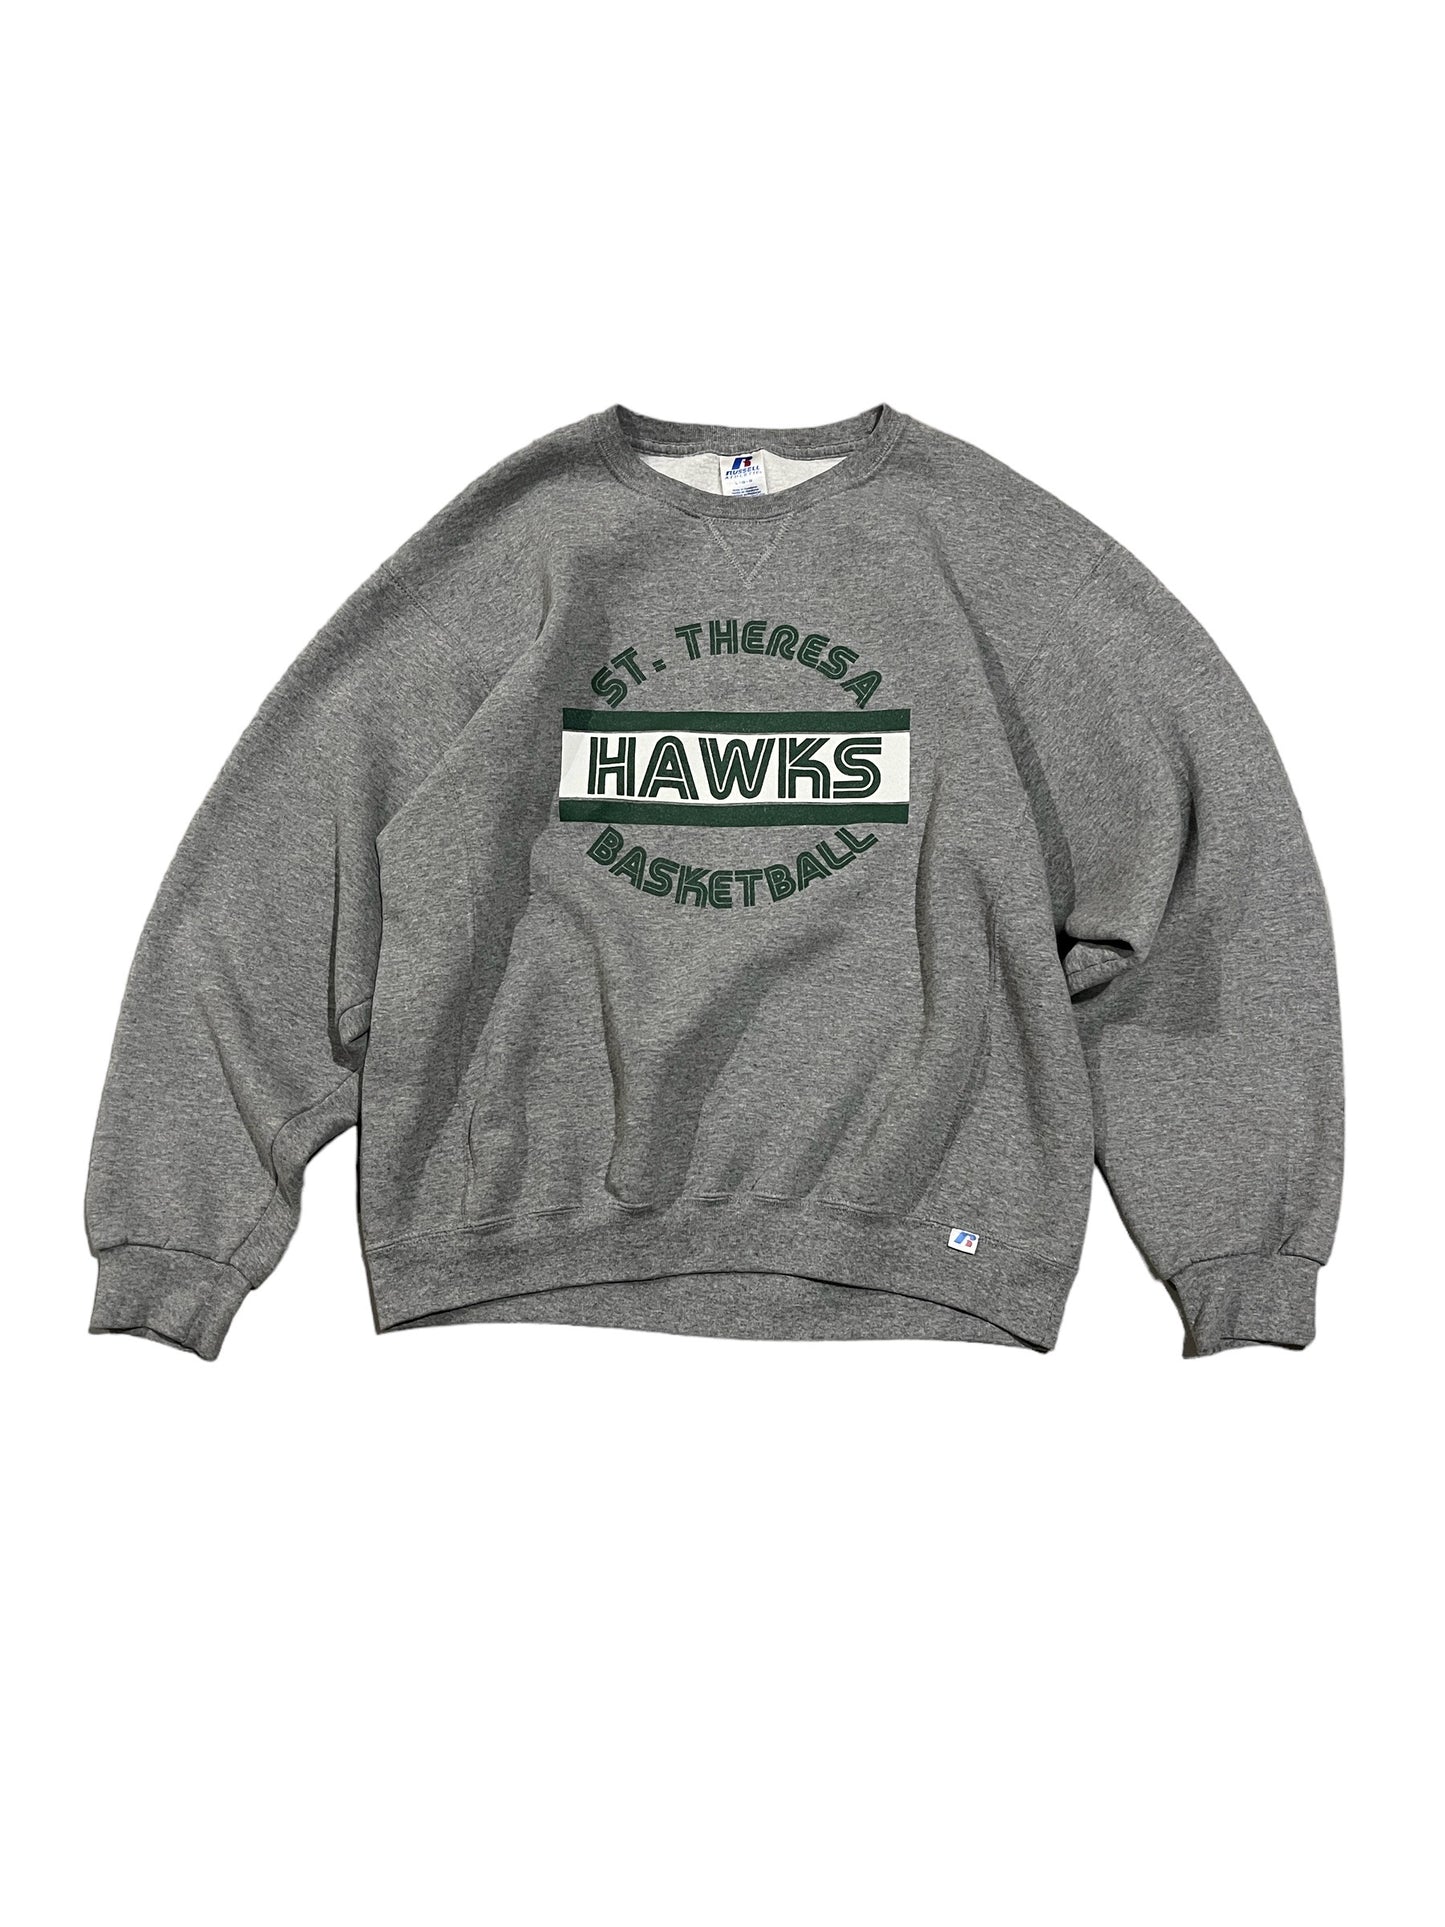 Vintage Russell Athletic St. Theresa Hawks Sweater